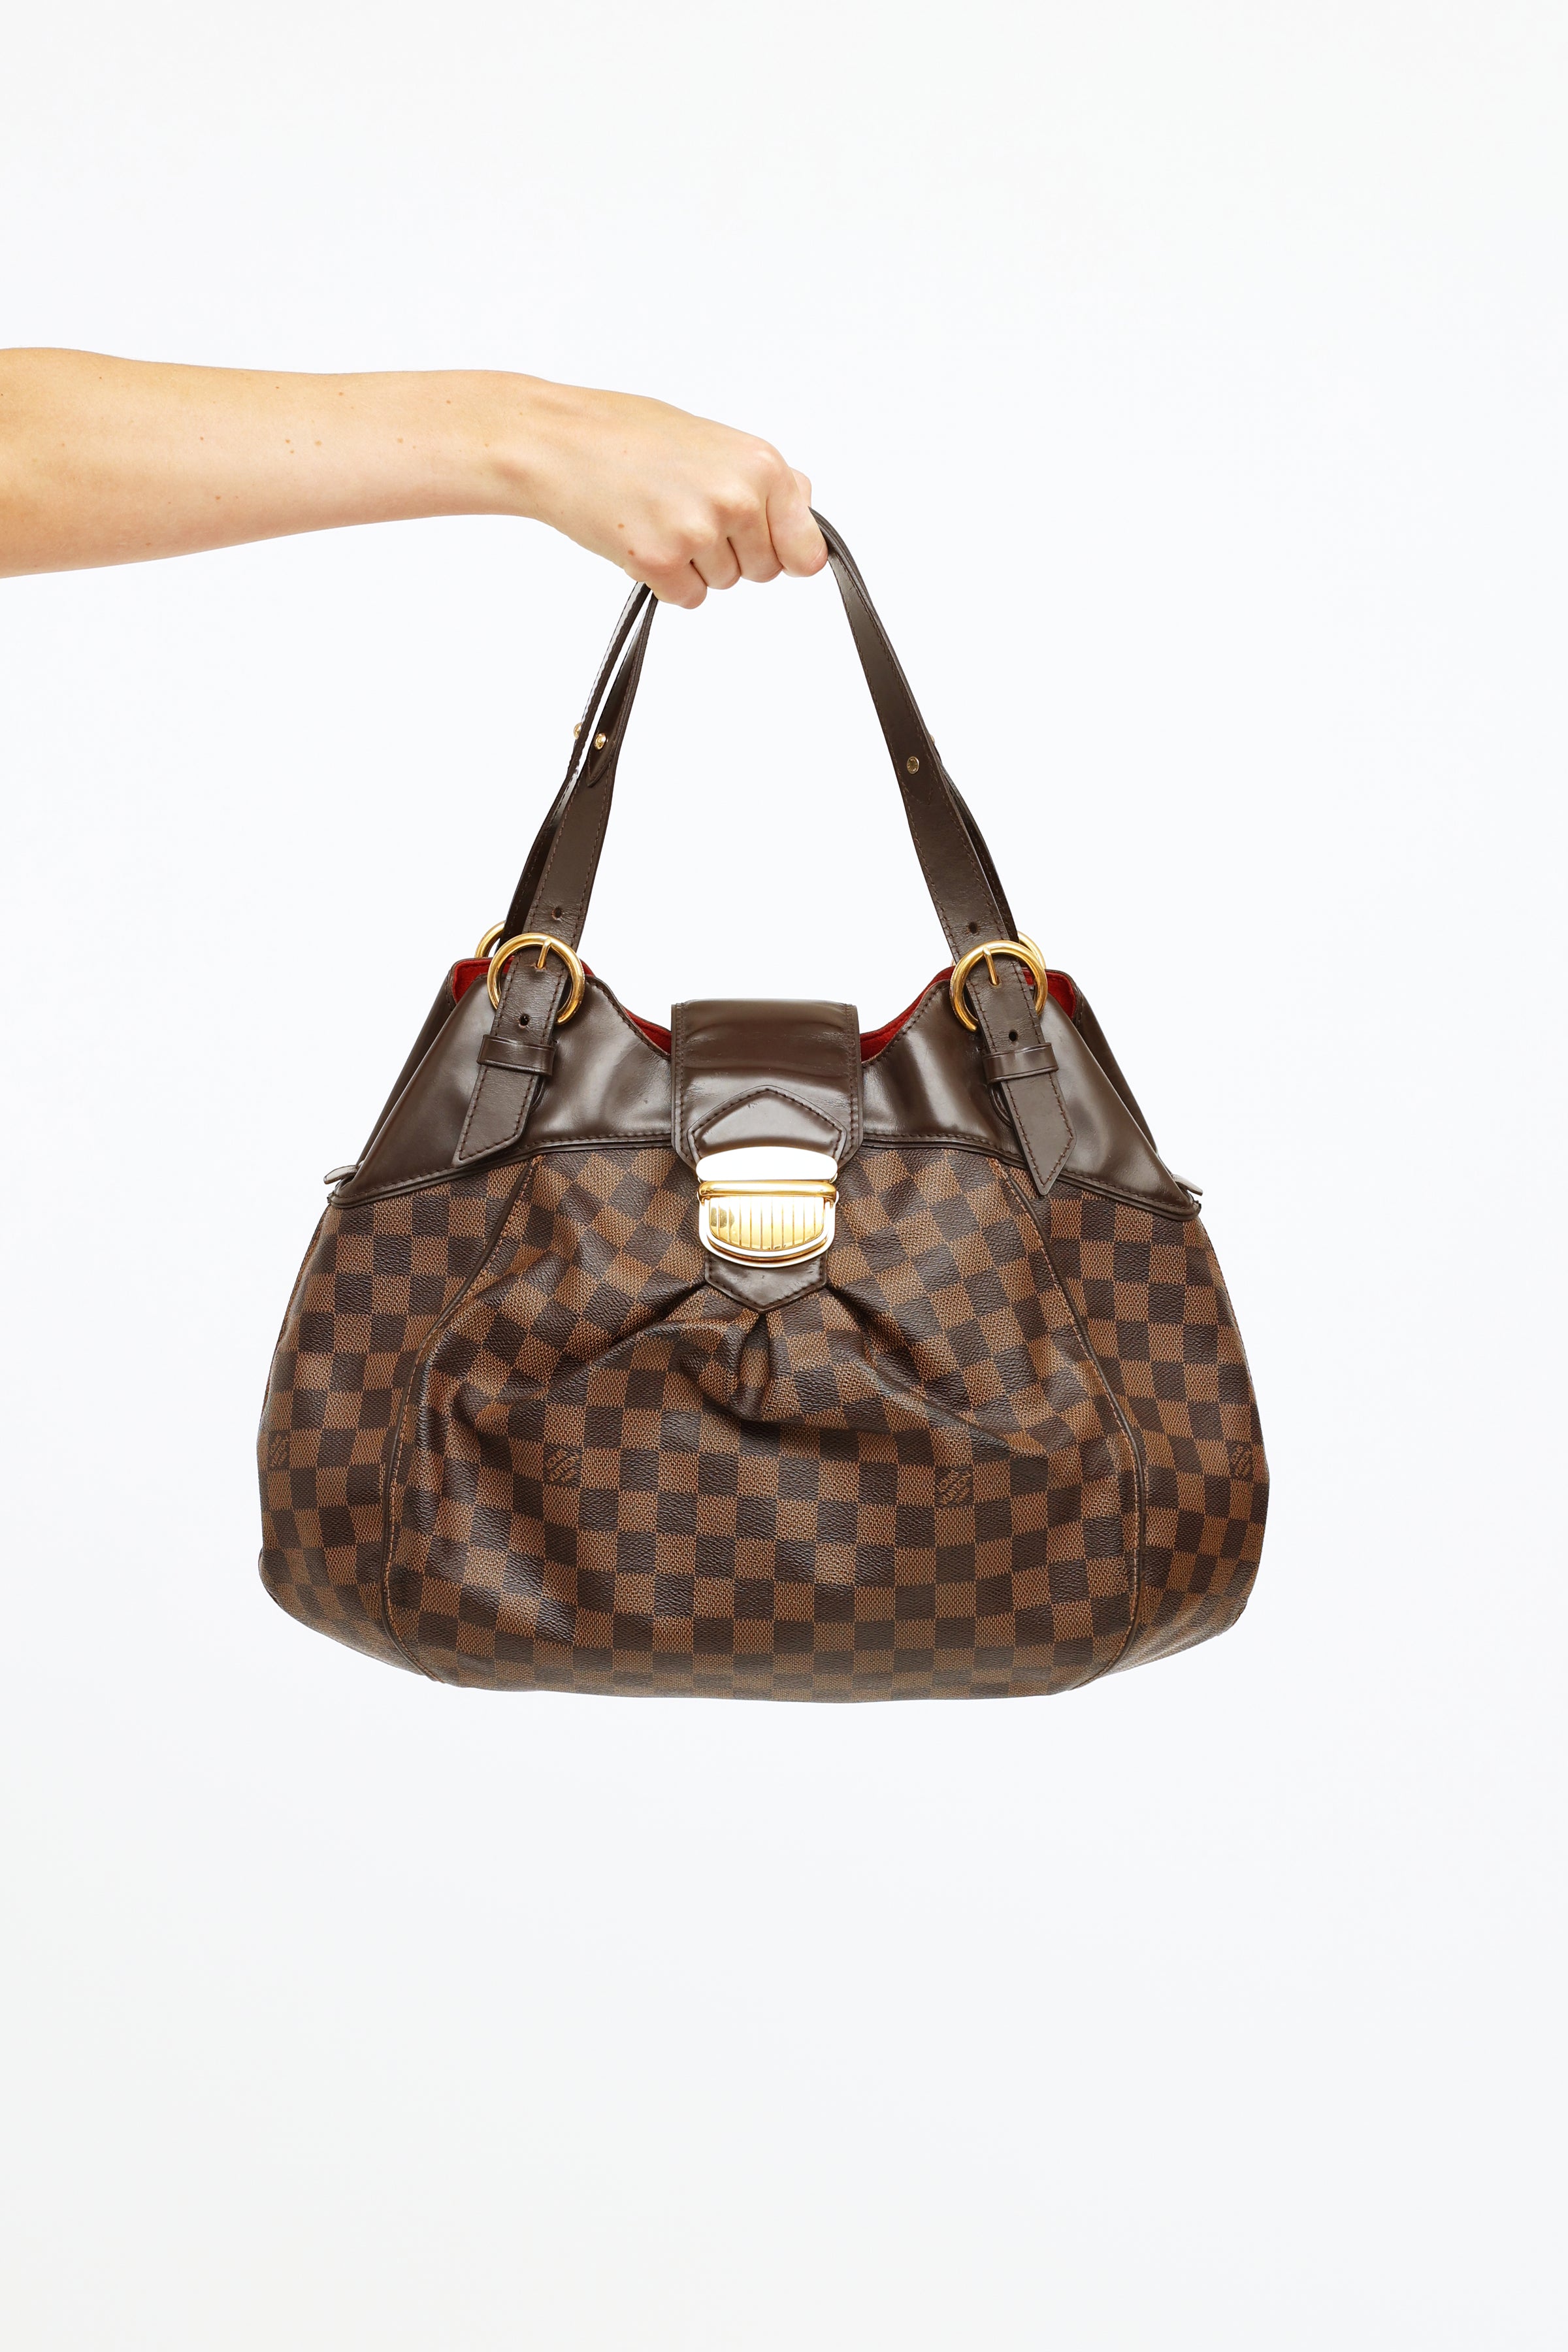 Louis Vuitton Sistina Shoulder Bag